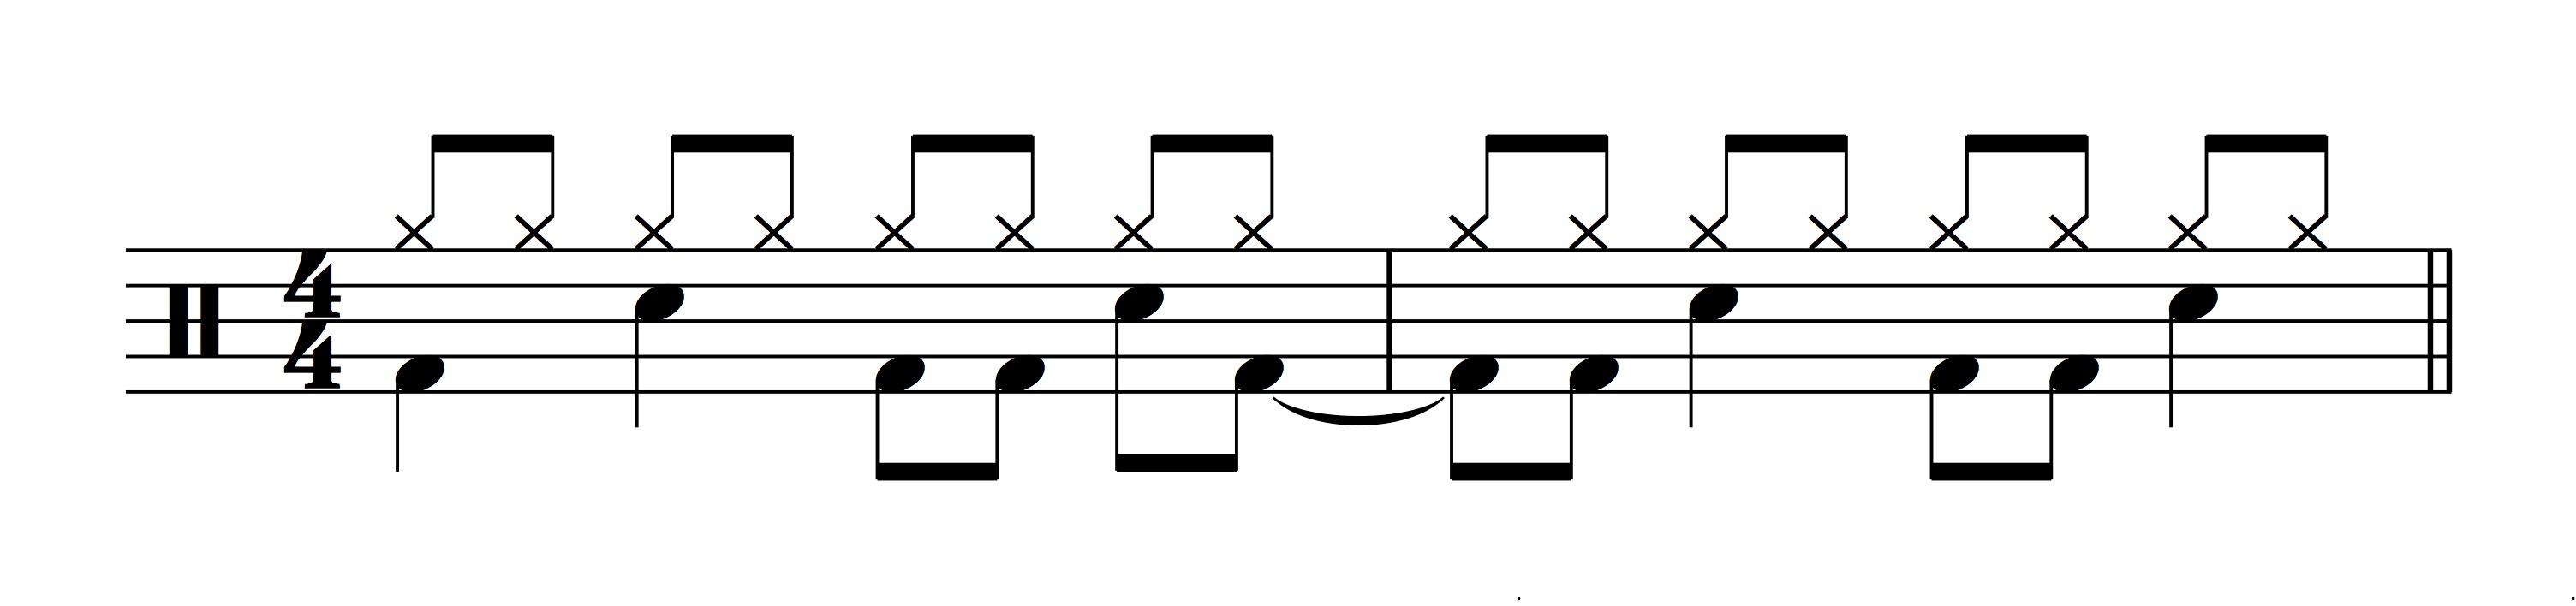 Figure 2.: Embellished version of the standard rock beat.